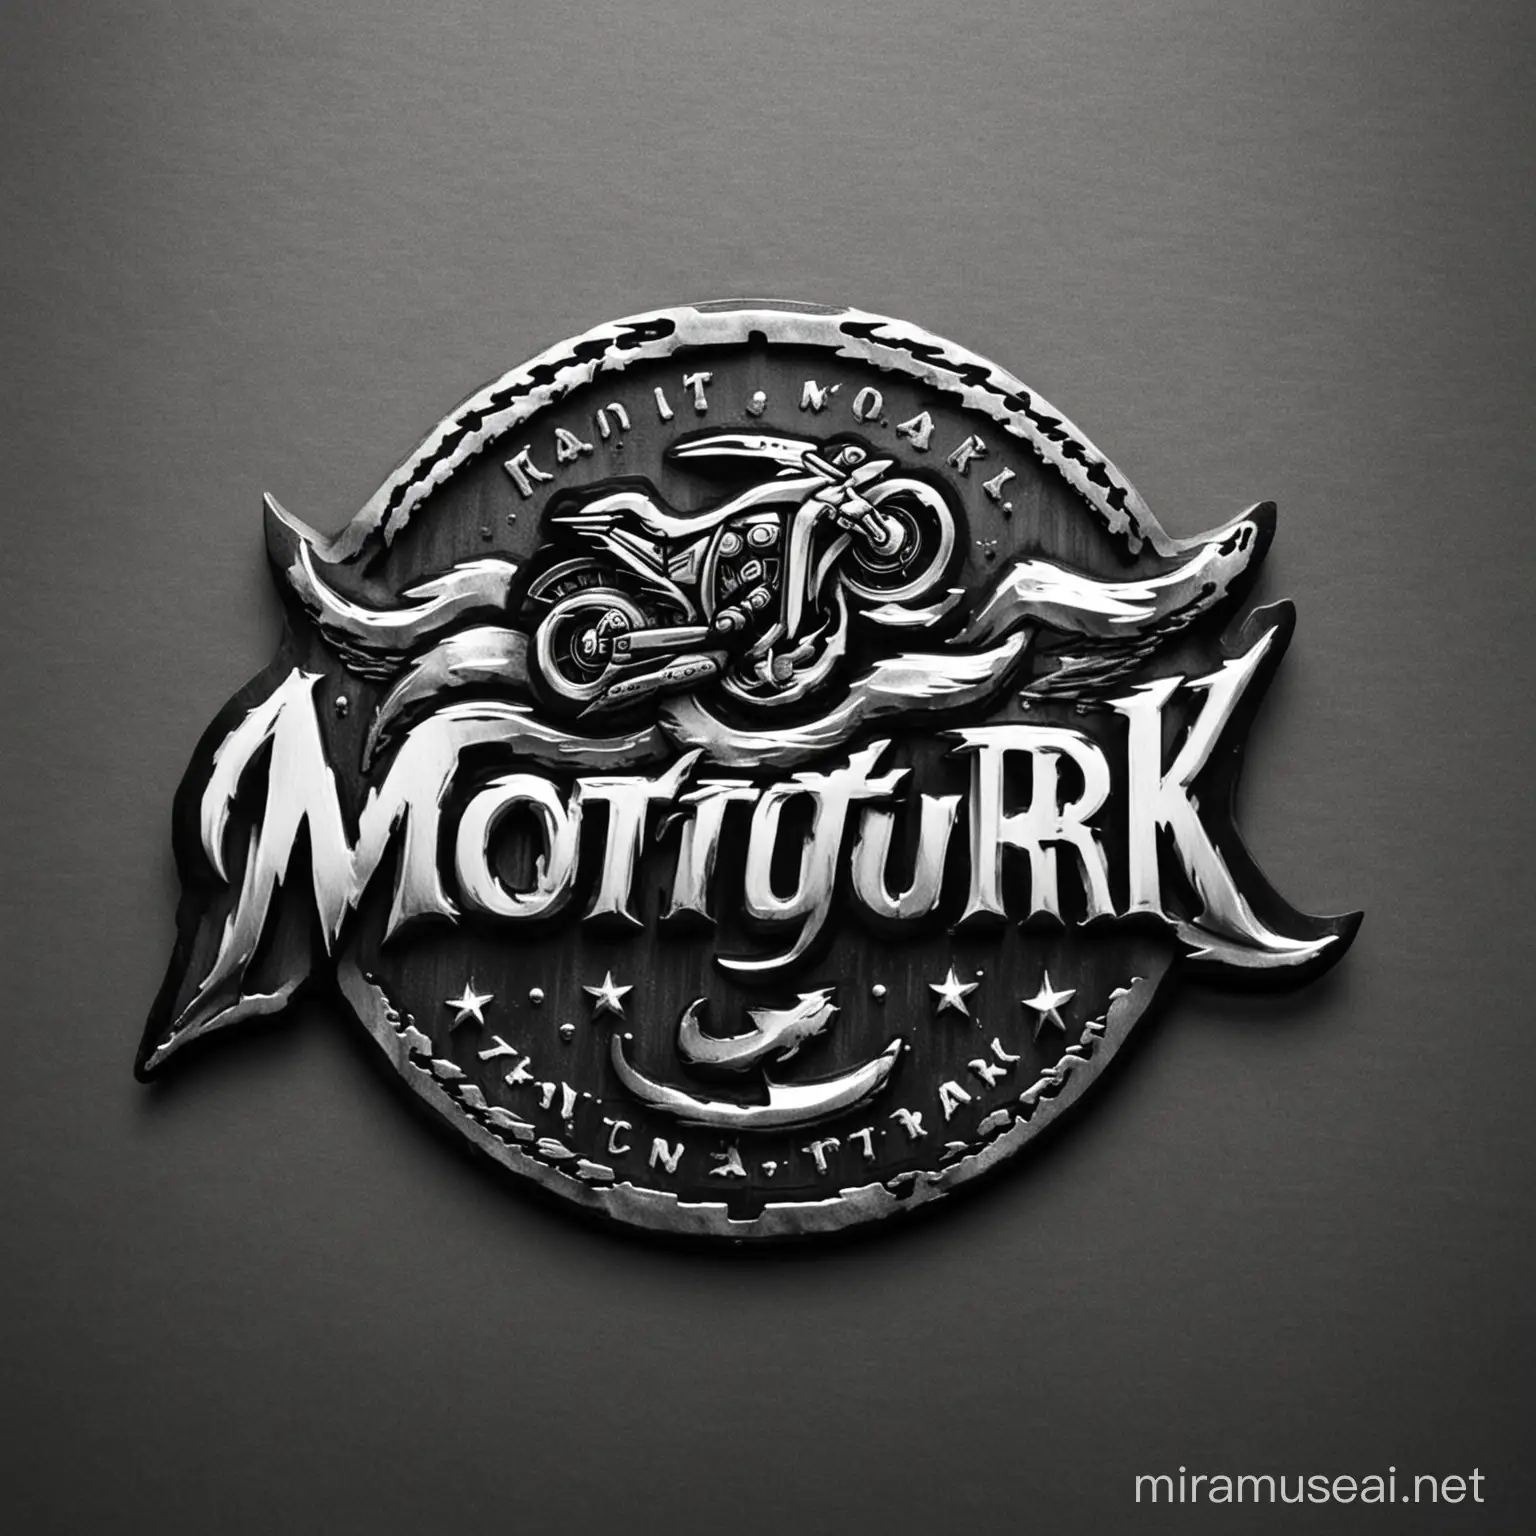 Colorful Motorcycle Logo Design for MotoTrk